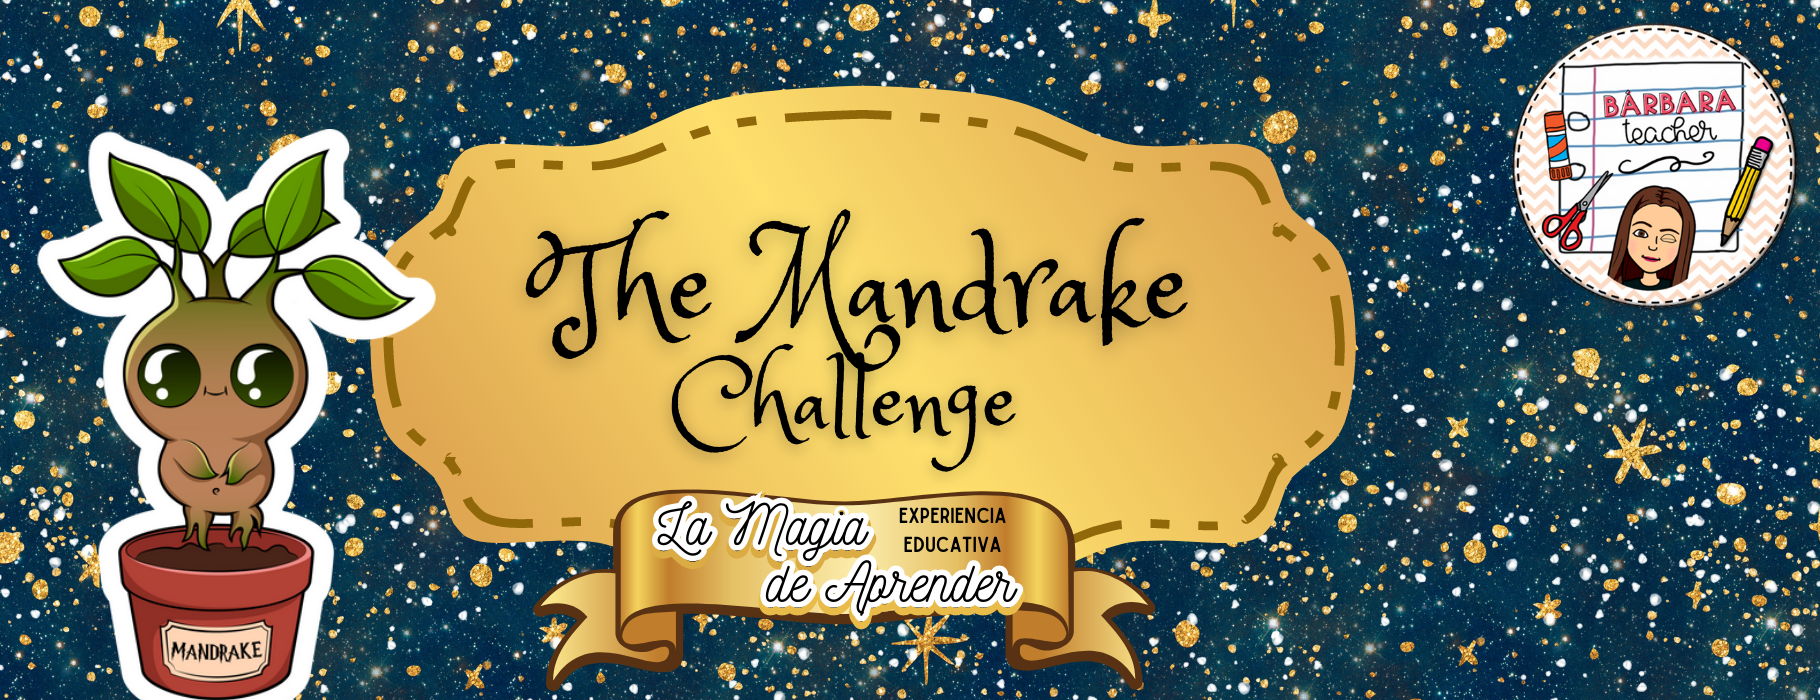 mandrake challenge